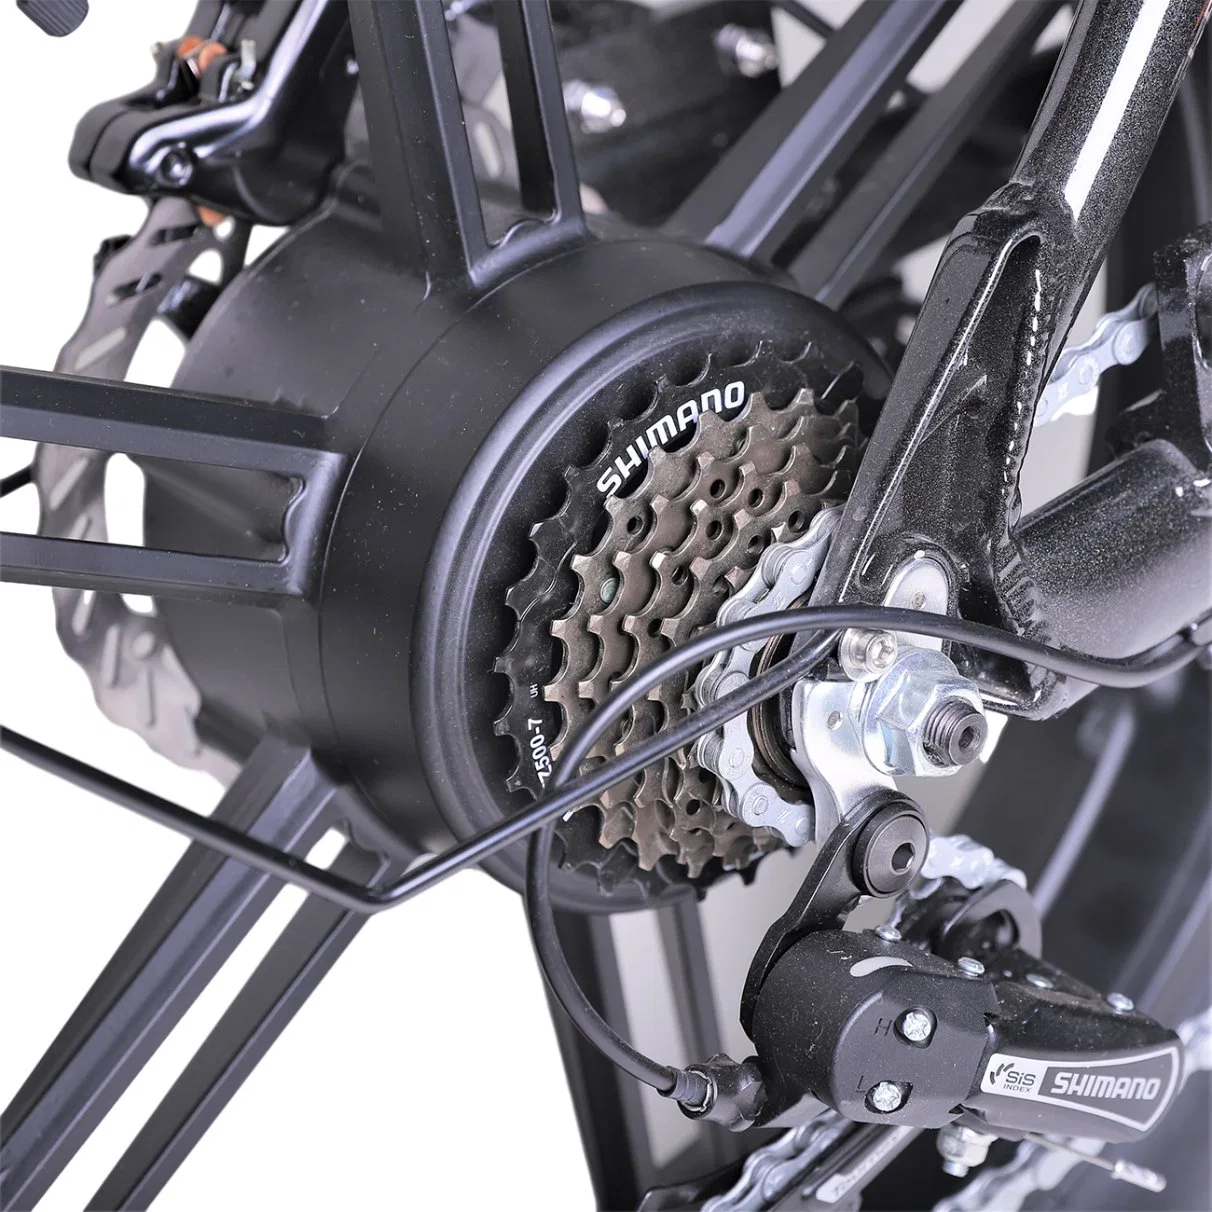 20*4.0 Fat Tire ذكر الجبال وإطار الألومنيوم للتنقل الدراجة الكهربائية E-Bicycle Ebike محرك ثنائي متوفر في المخزون في الولايات المتحدة، بما في ذلك الشحن